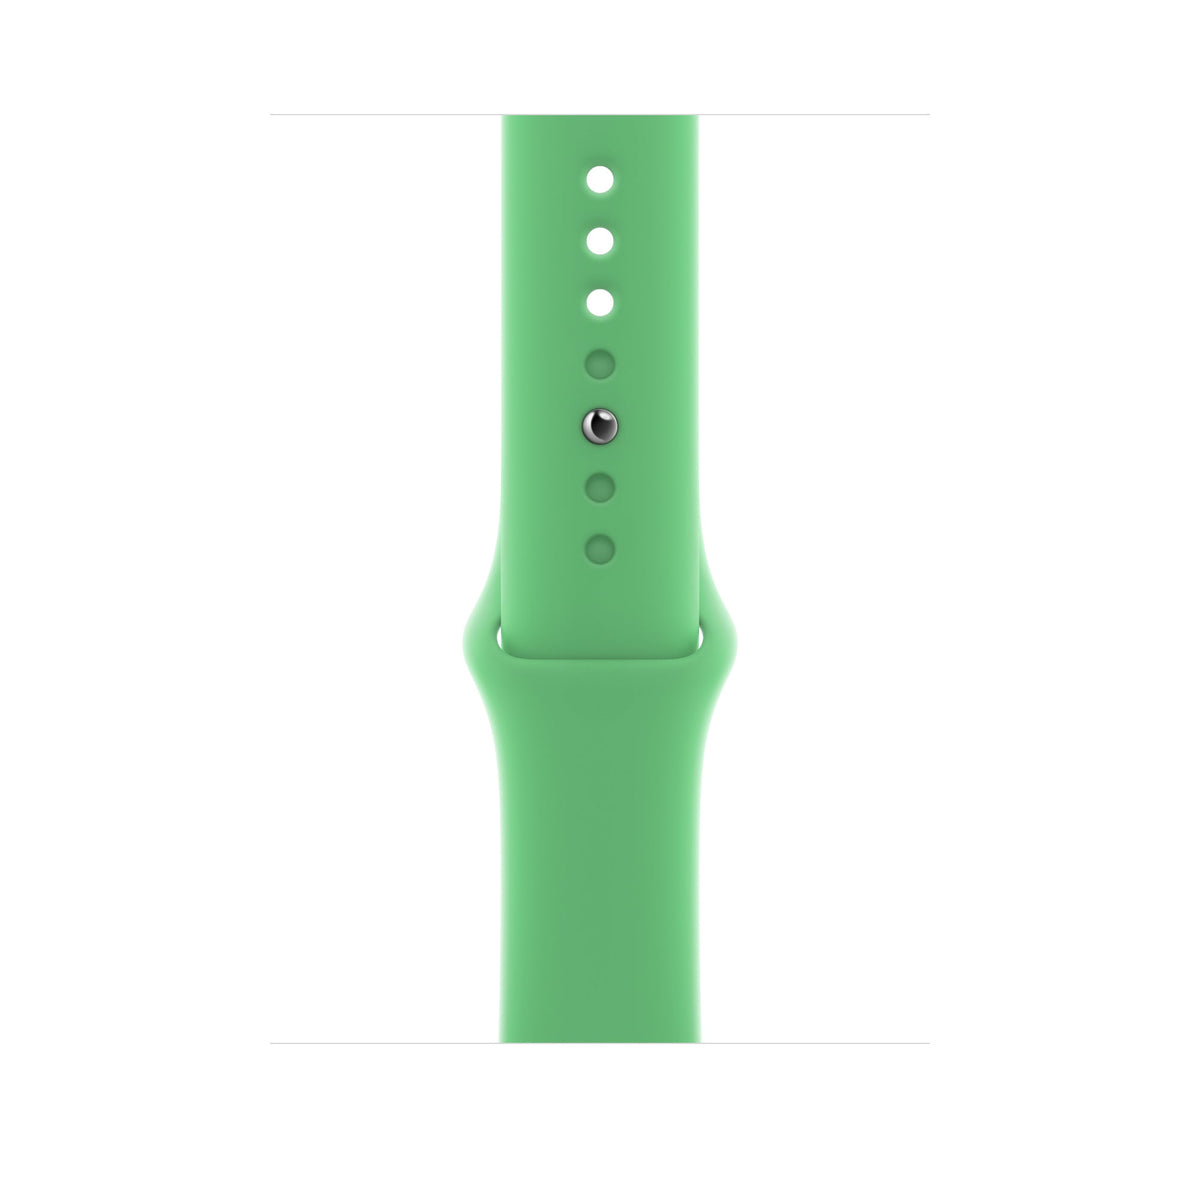 Apple 41mm Bright Green Sport Band - Regular